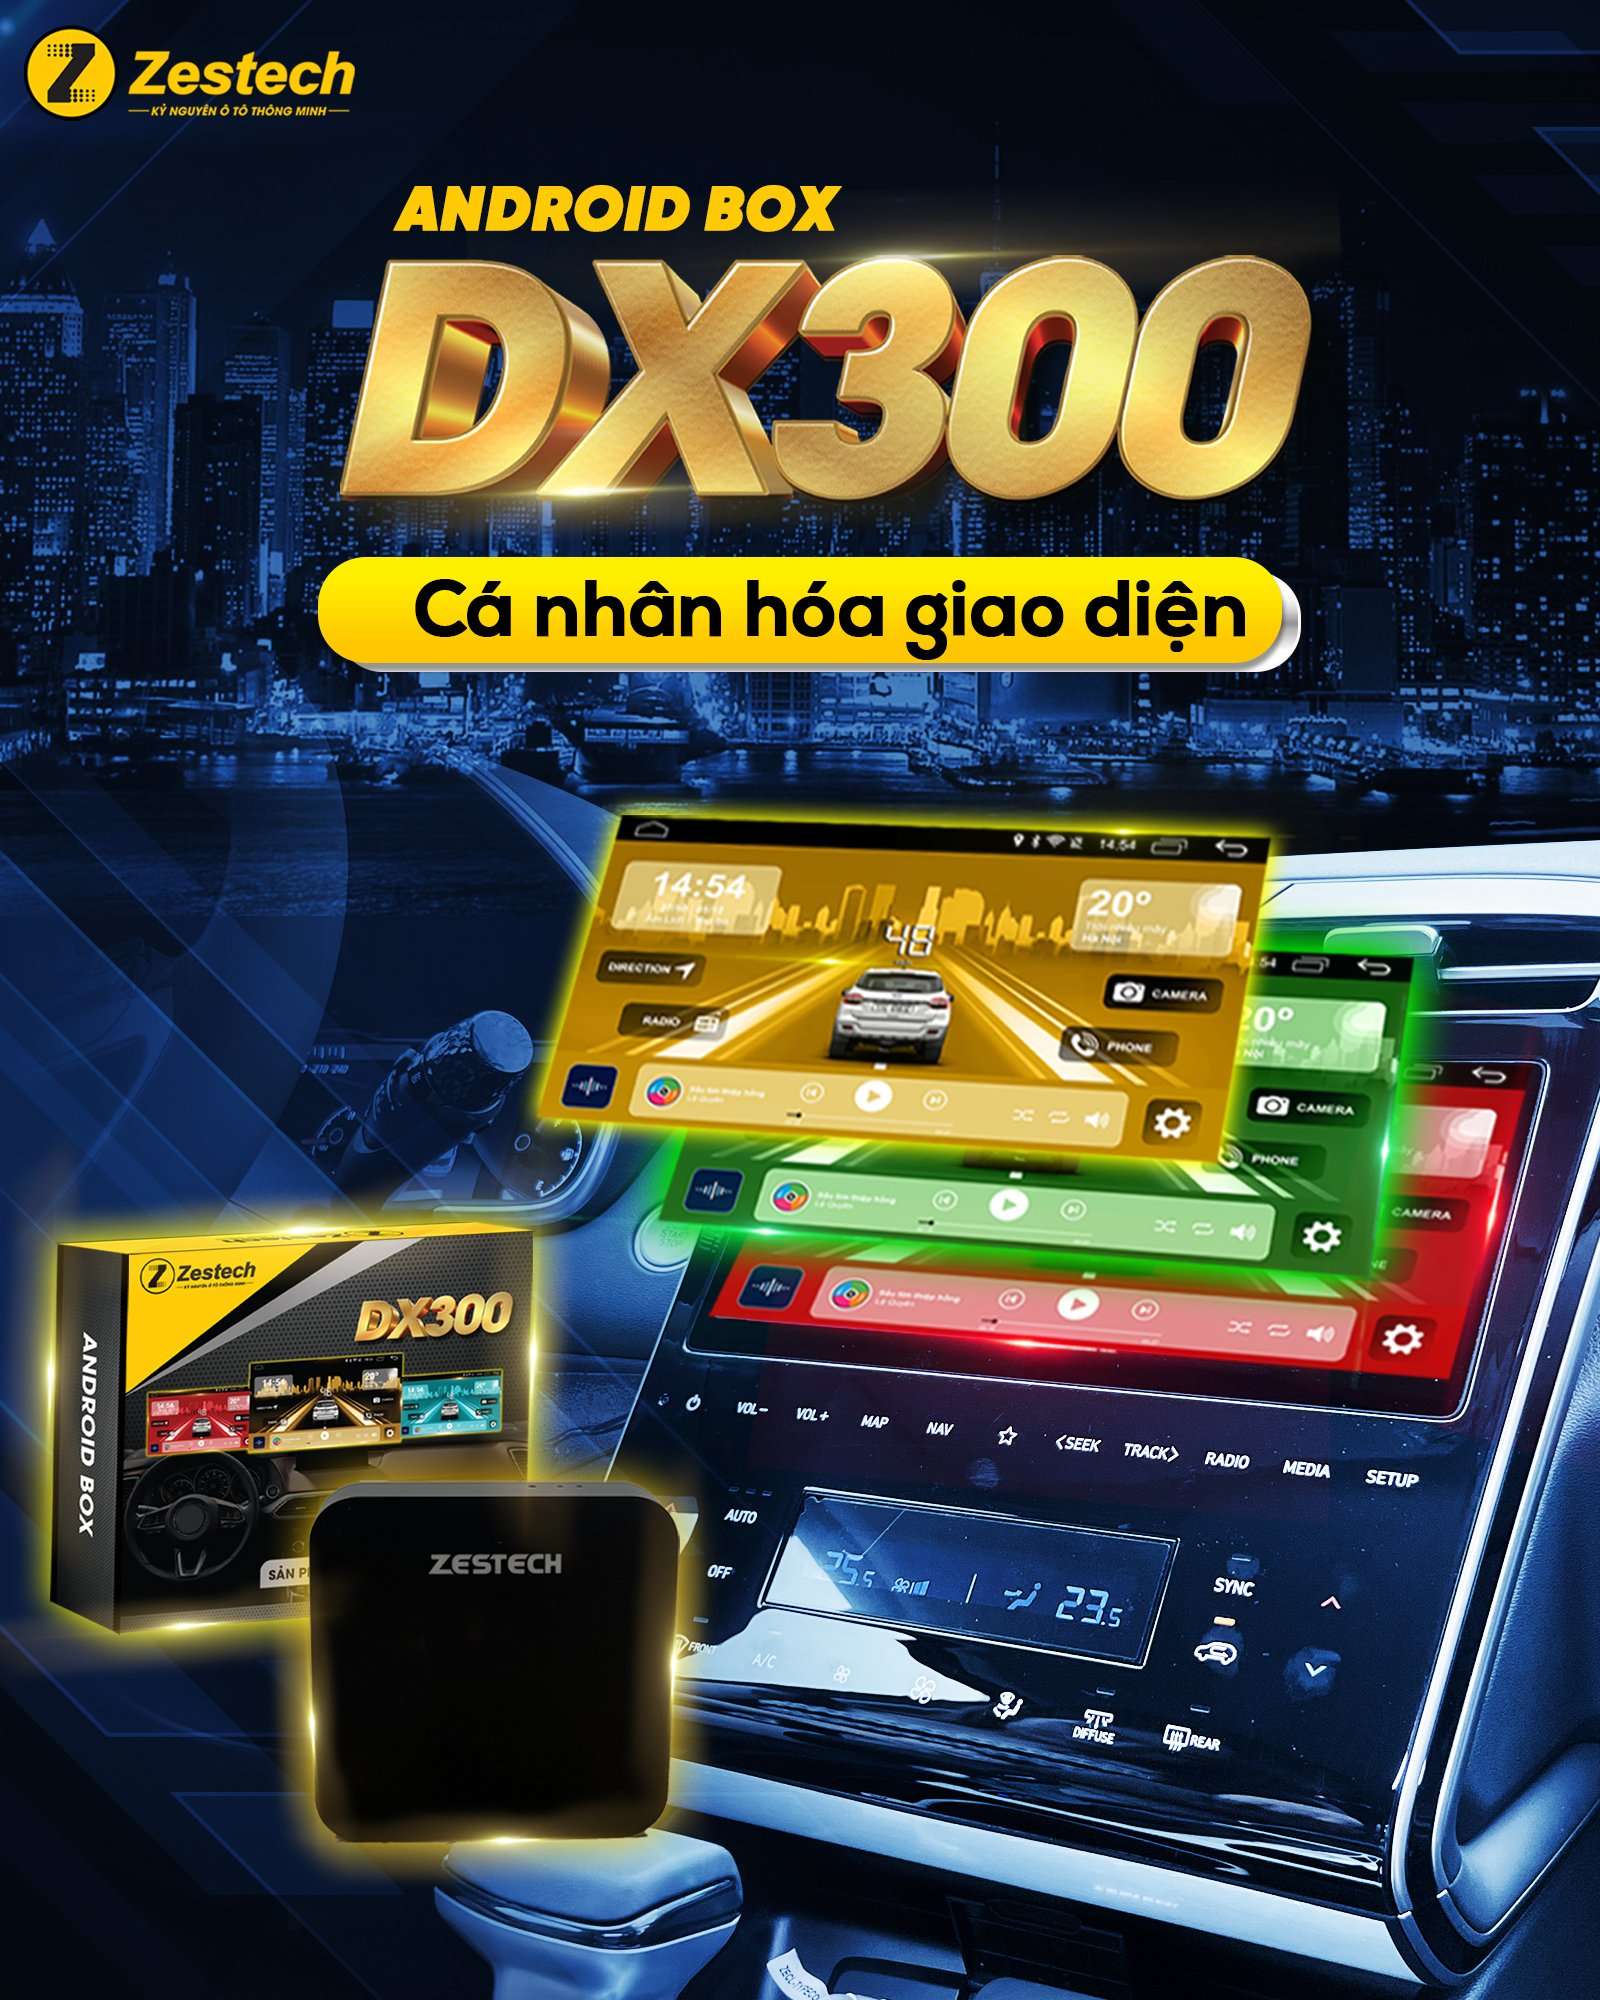 Android Box Zestech DX300 cá nhân hóa giao diện